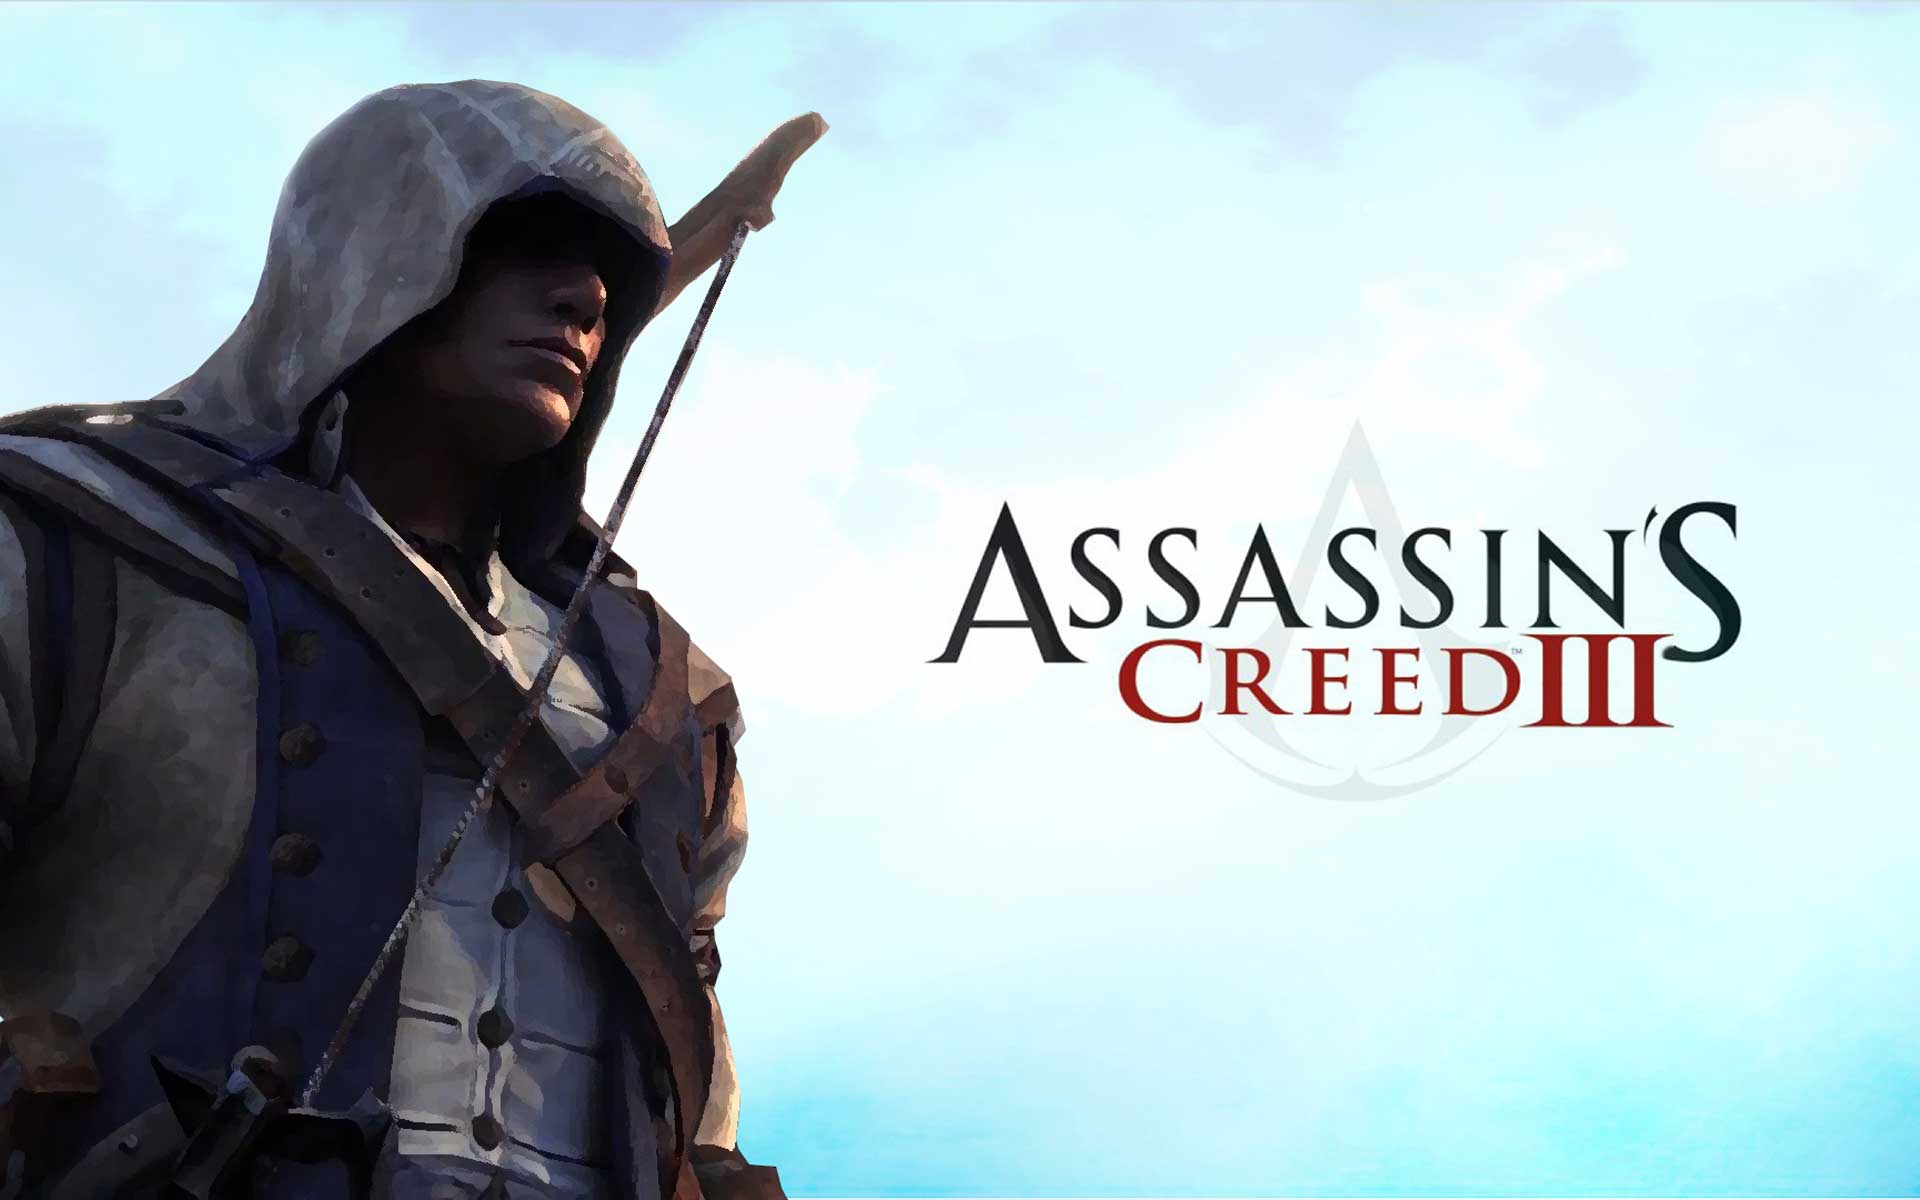 Assassin's Creed 3 - The Assassin's Wallpaper (31818503) - Fanpop